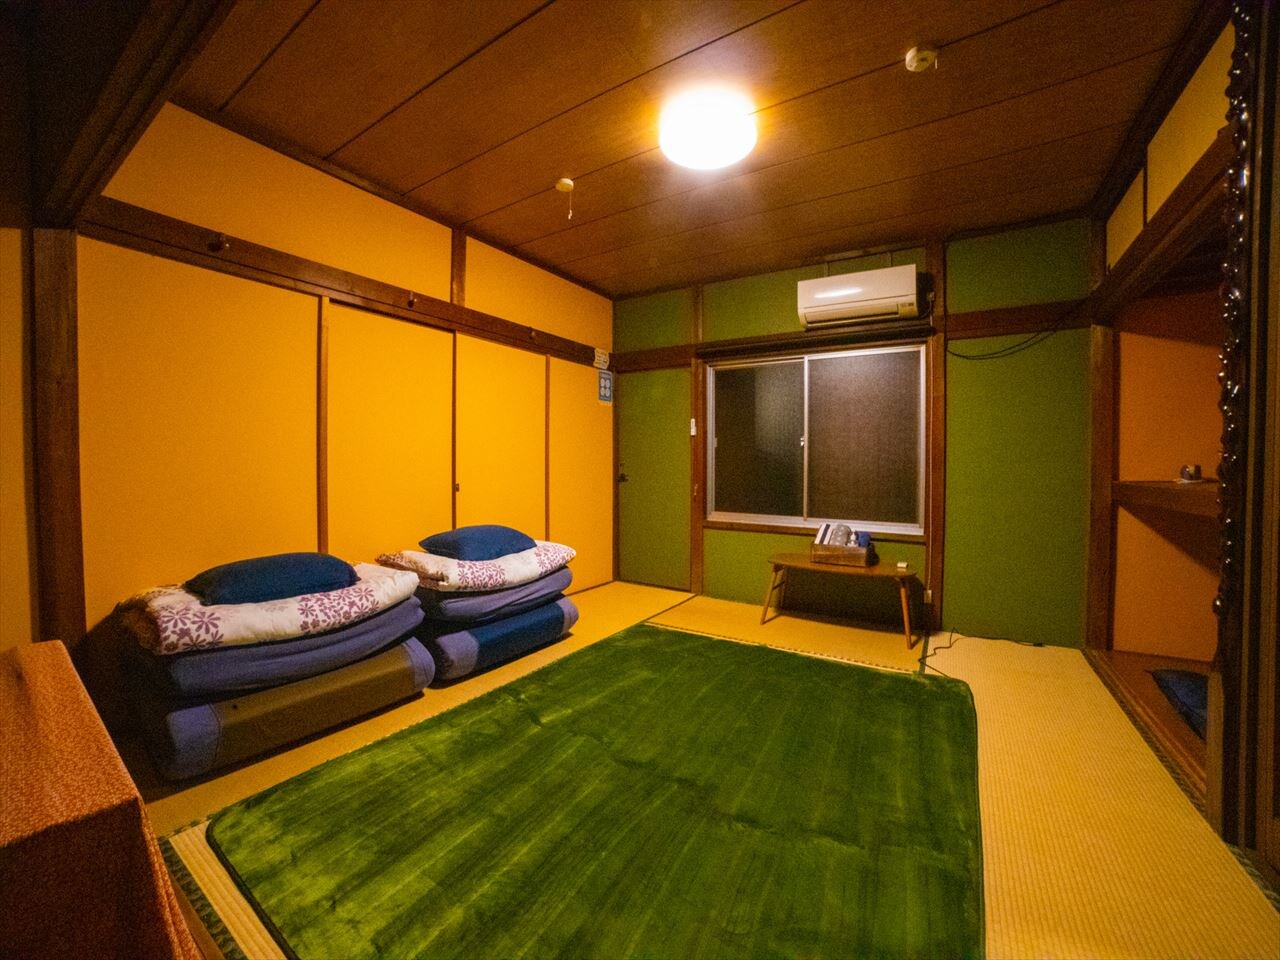 Kamar bergaya Jepang di lantai 2 paviliun